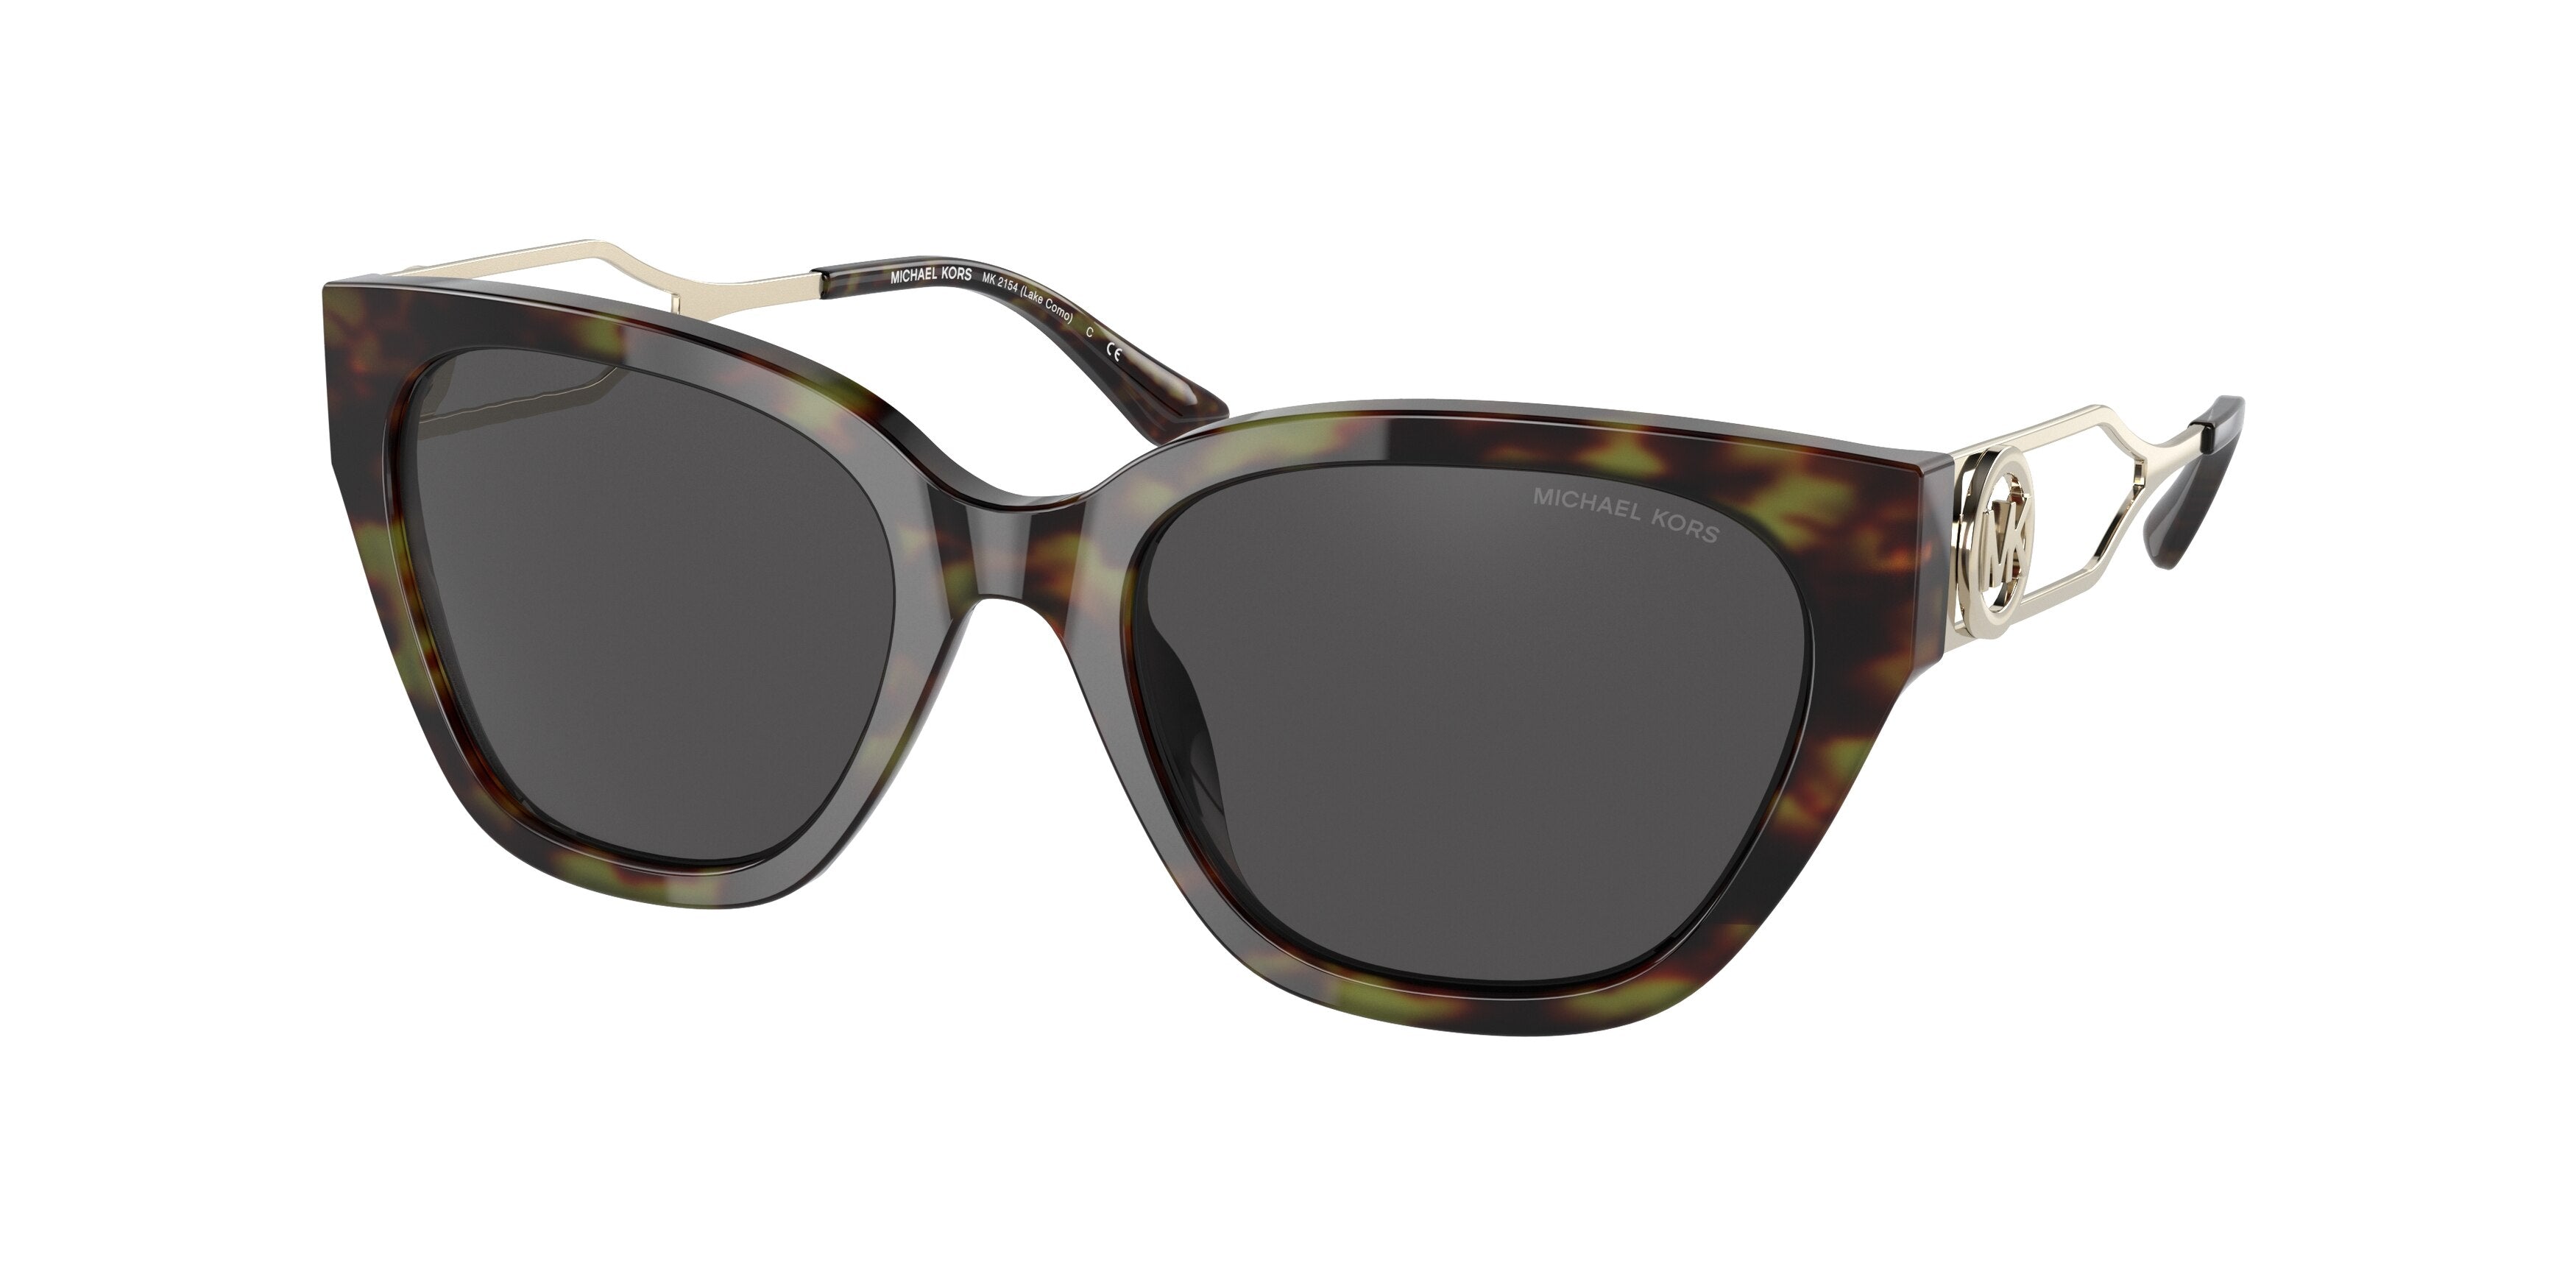 Michael Kors LAKE COMO MK2154 Square Sunglasses